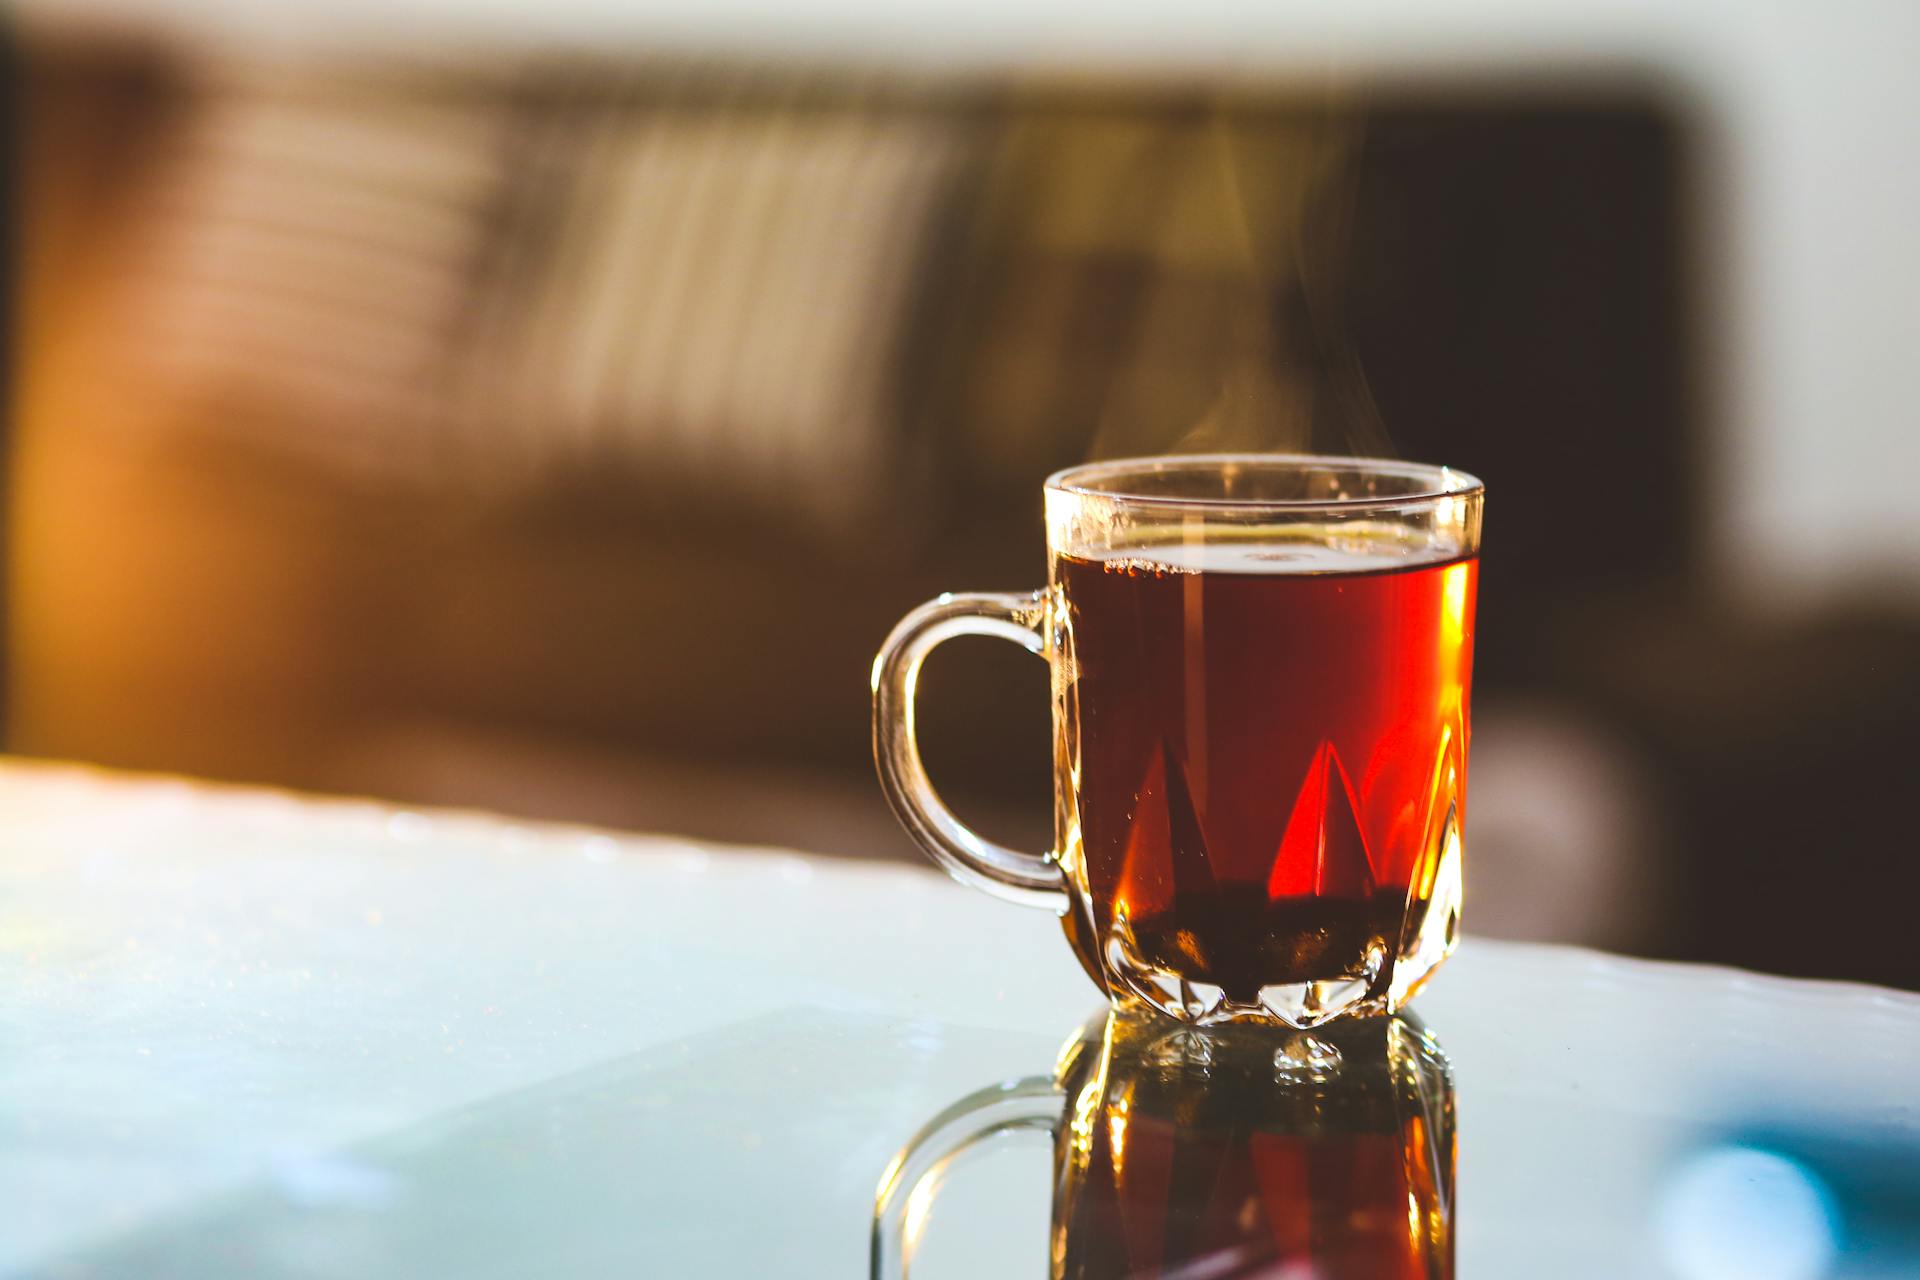 Cup of tea | Source: Pexels